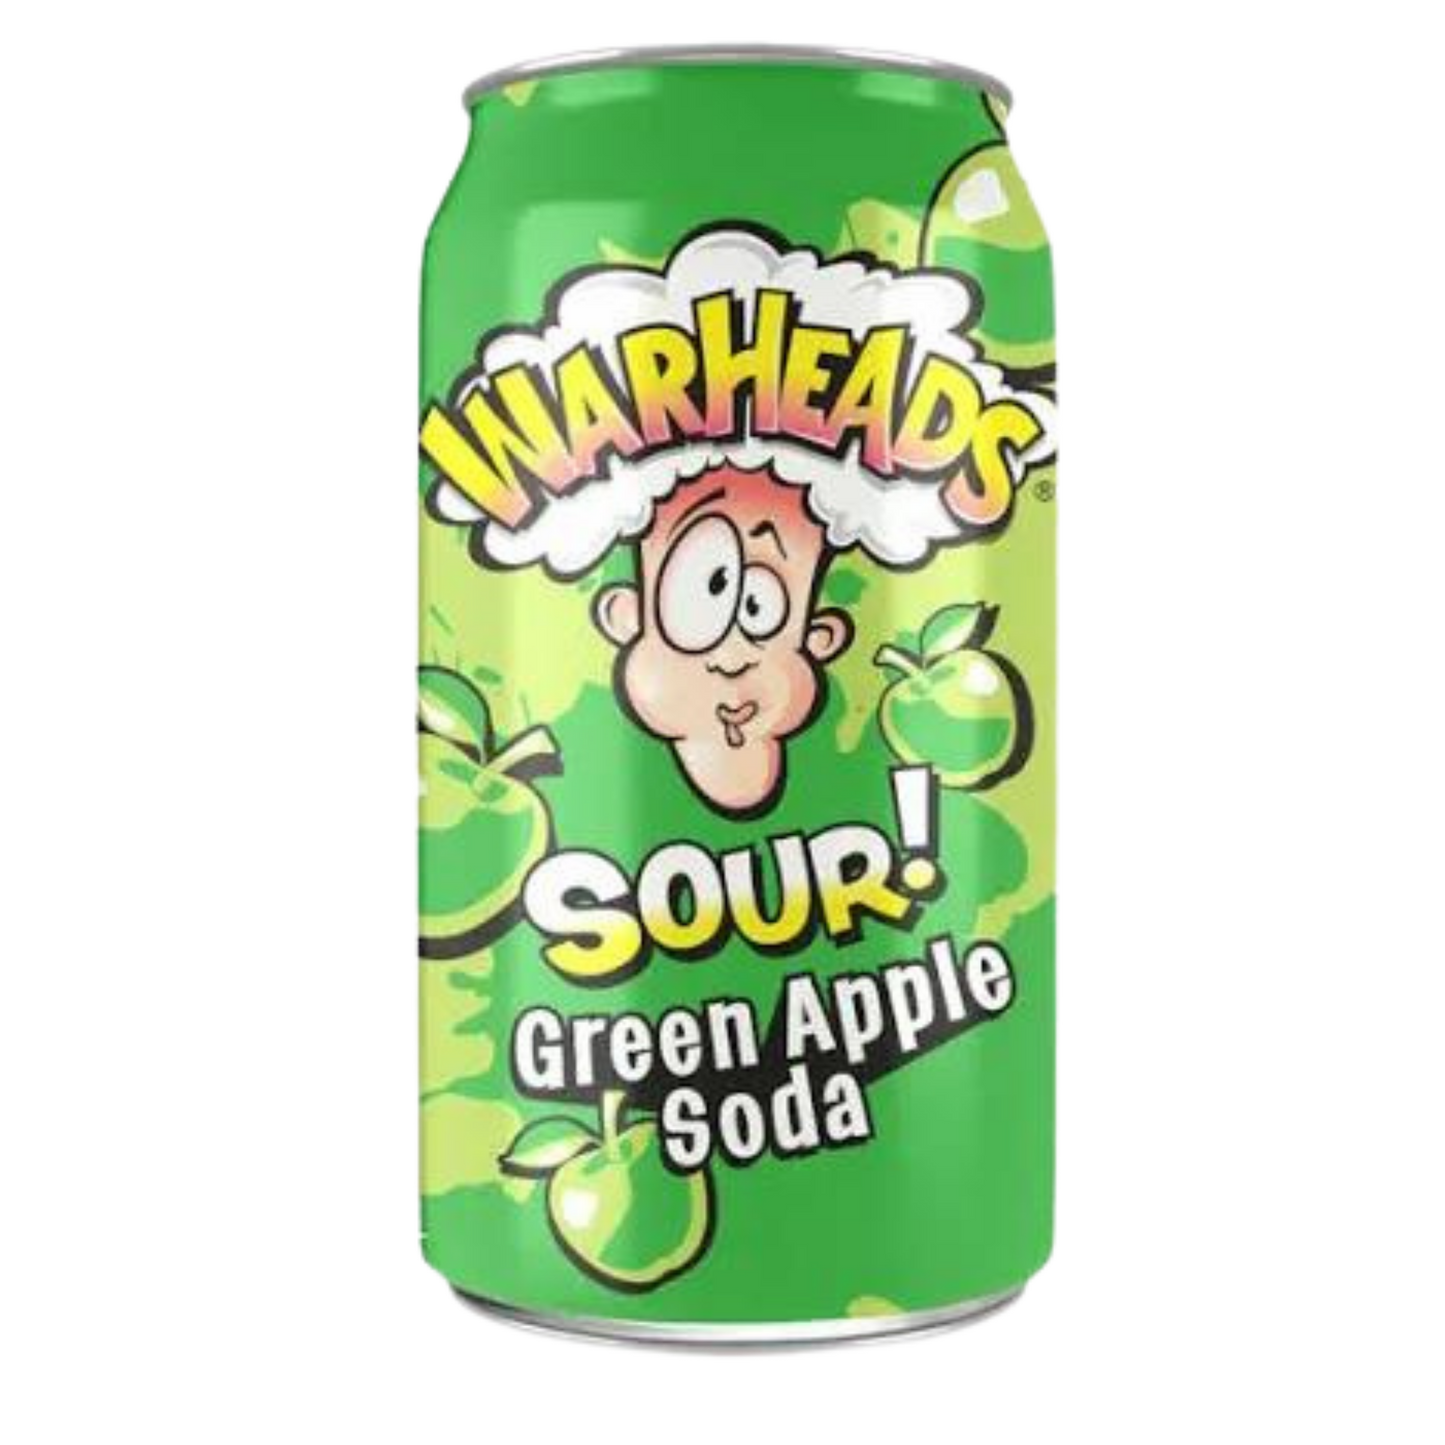 Warheads SOUR! Green Apple Soda - 12oz (355ml)